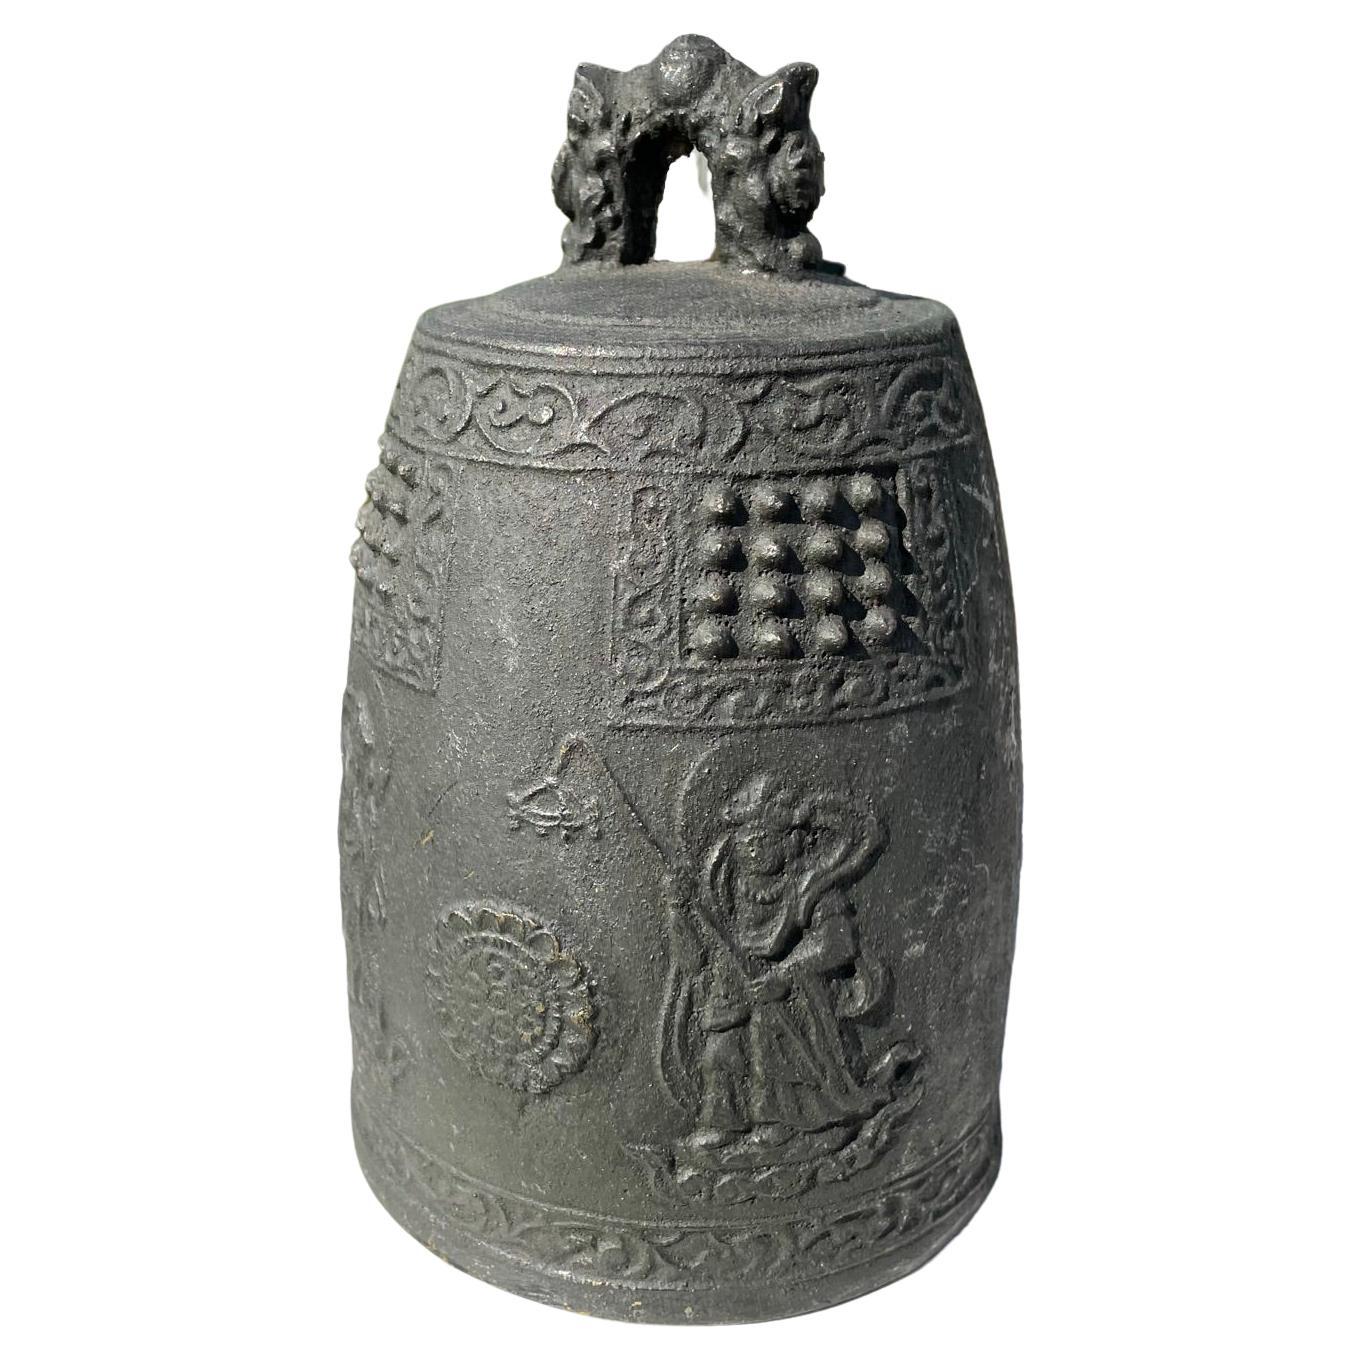 Japanese Old Buddhist Guan-Yin Cast Bell Resonates Pleasing Sound